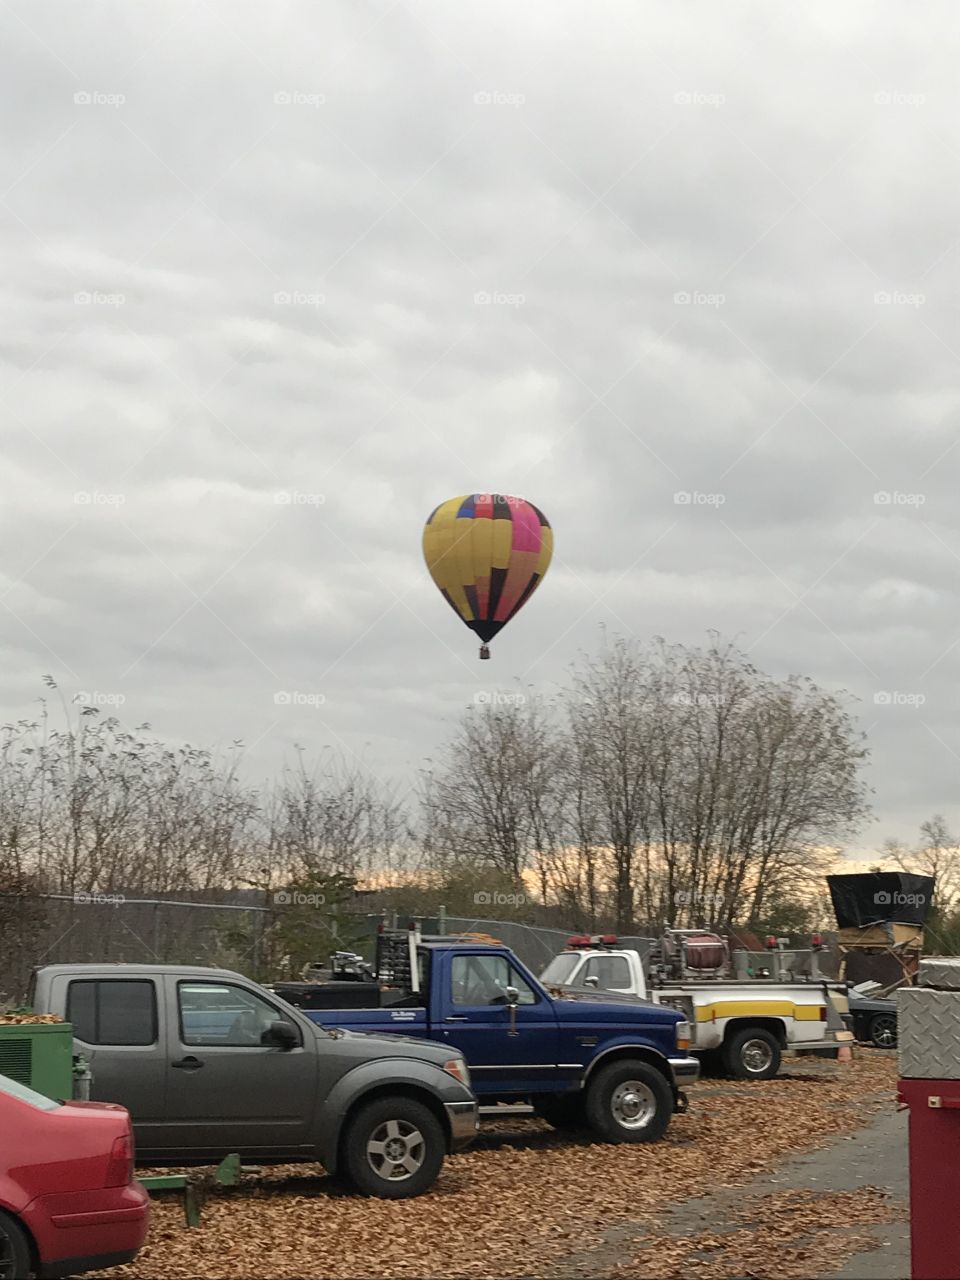 Hot air ballon almost landing at out shop. 